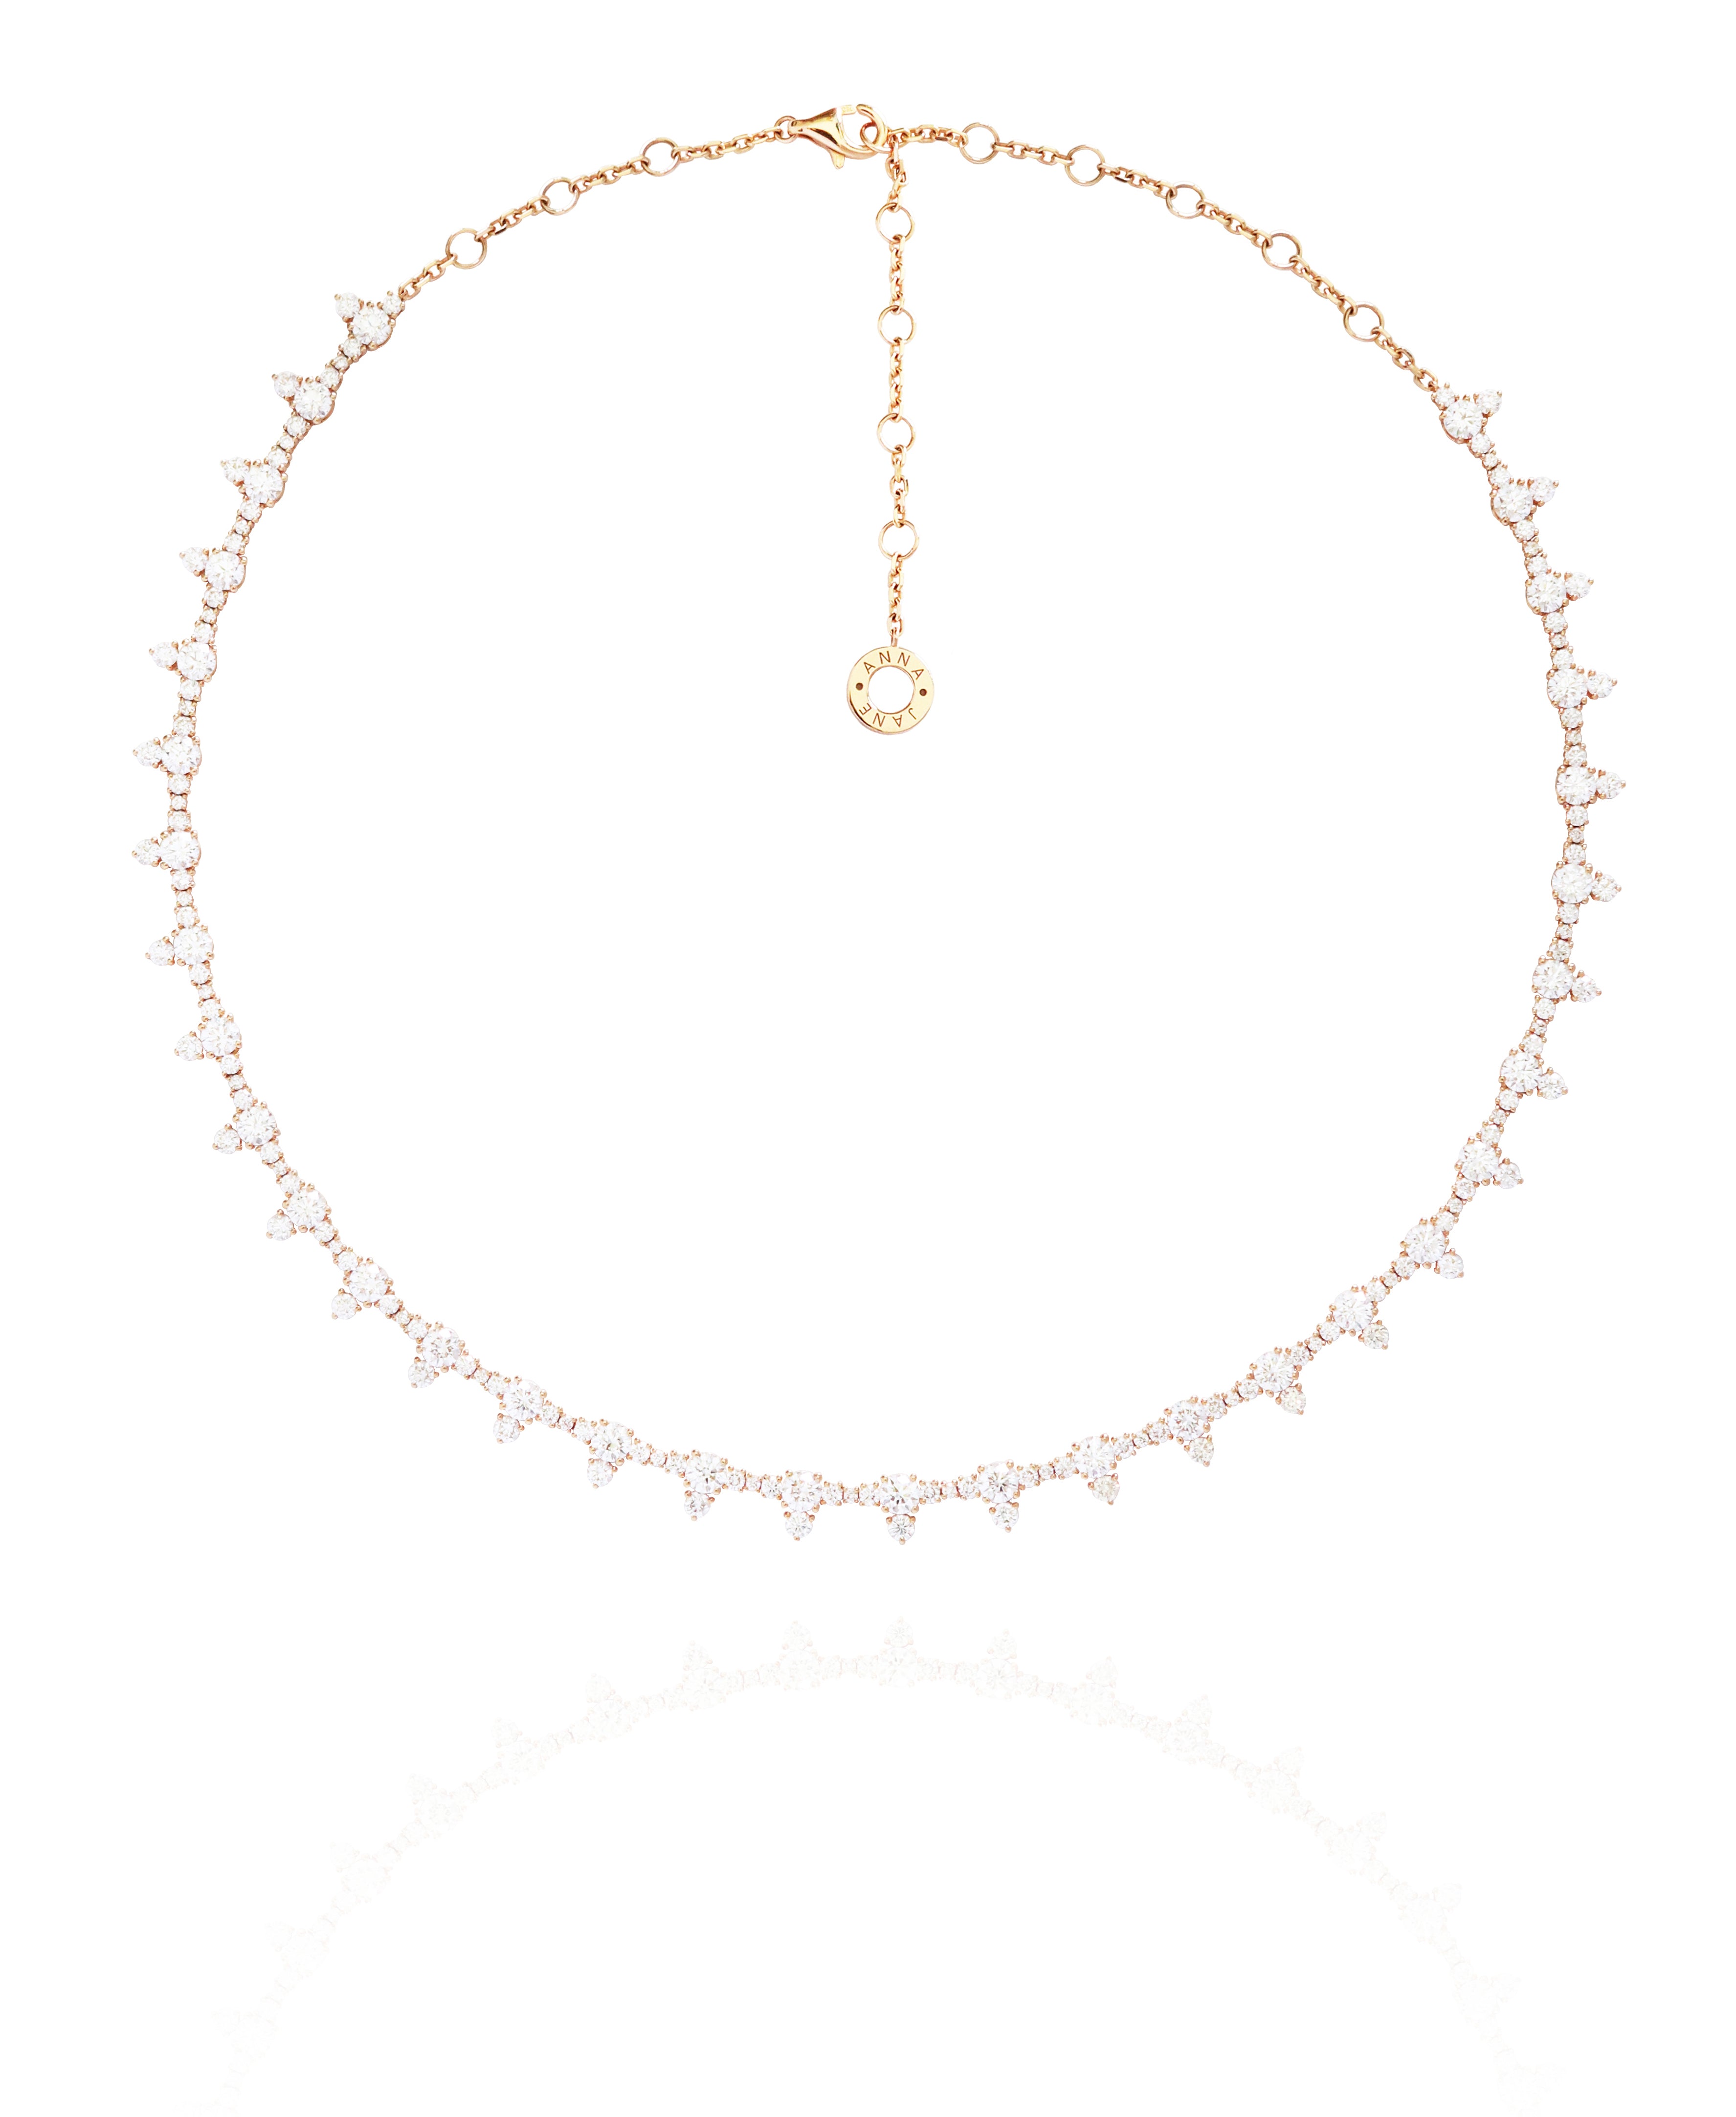 Adaline Diamond Necklace in White Gold